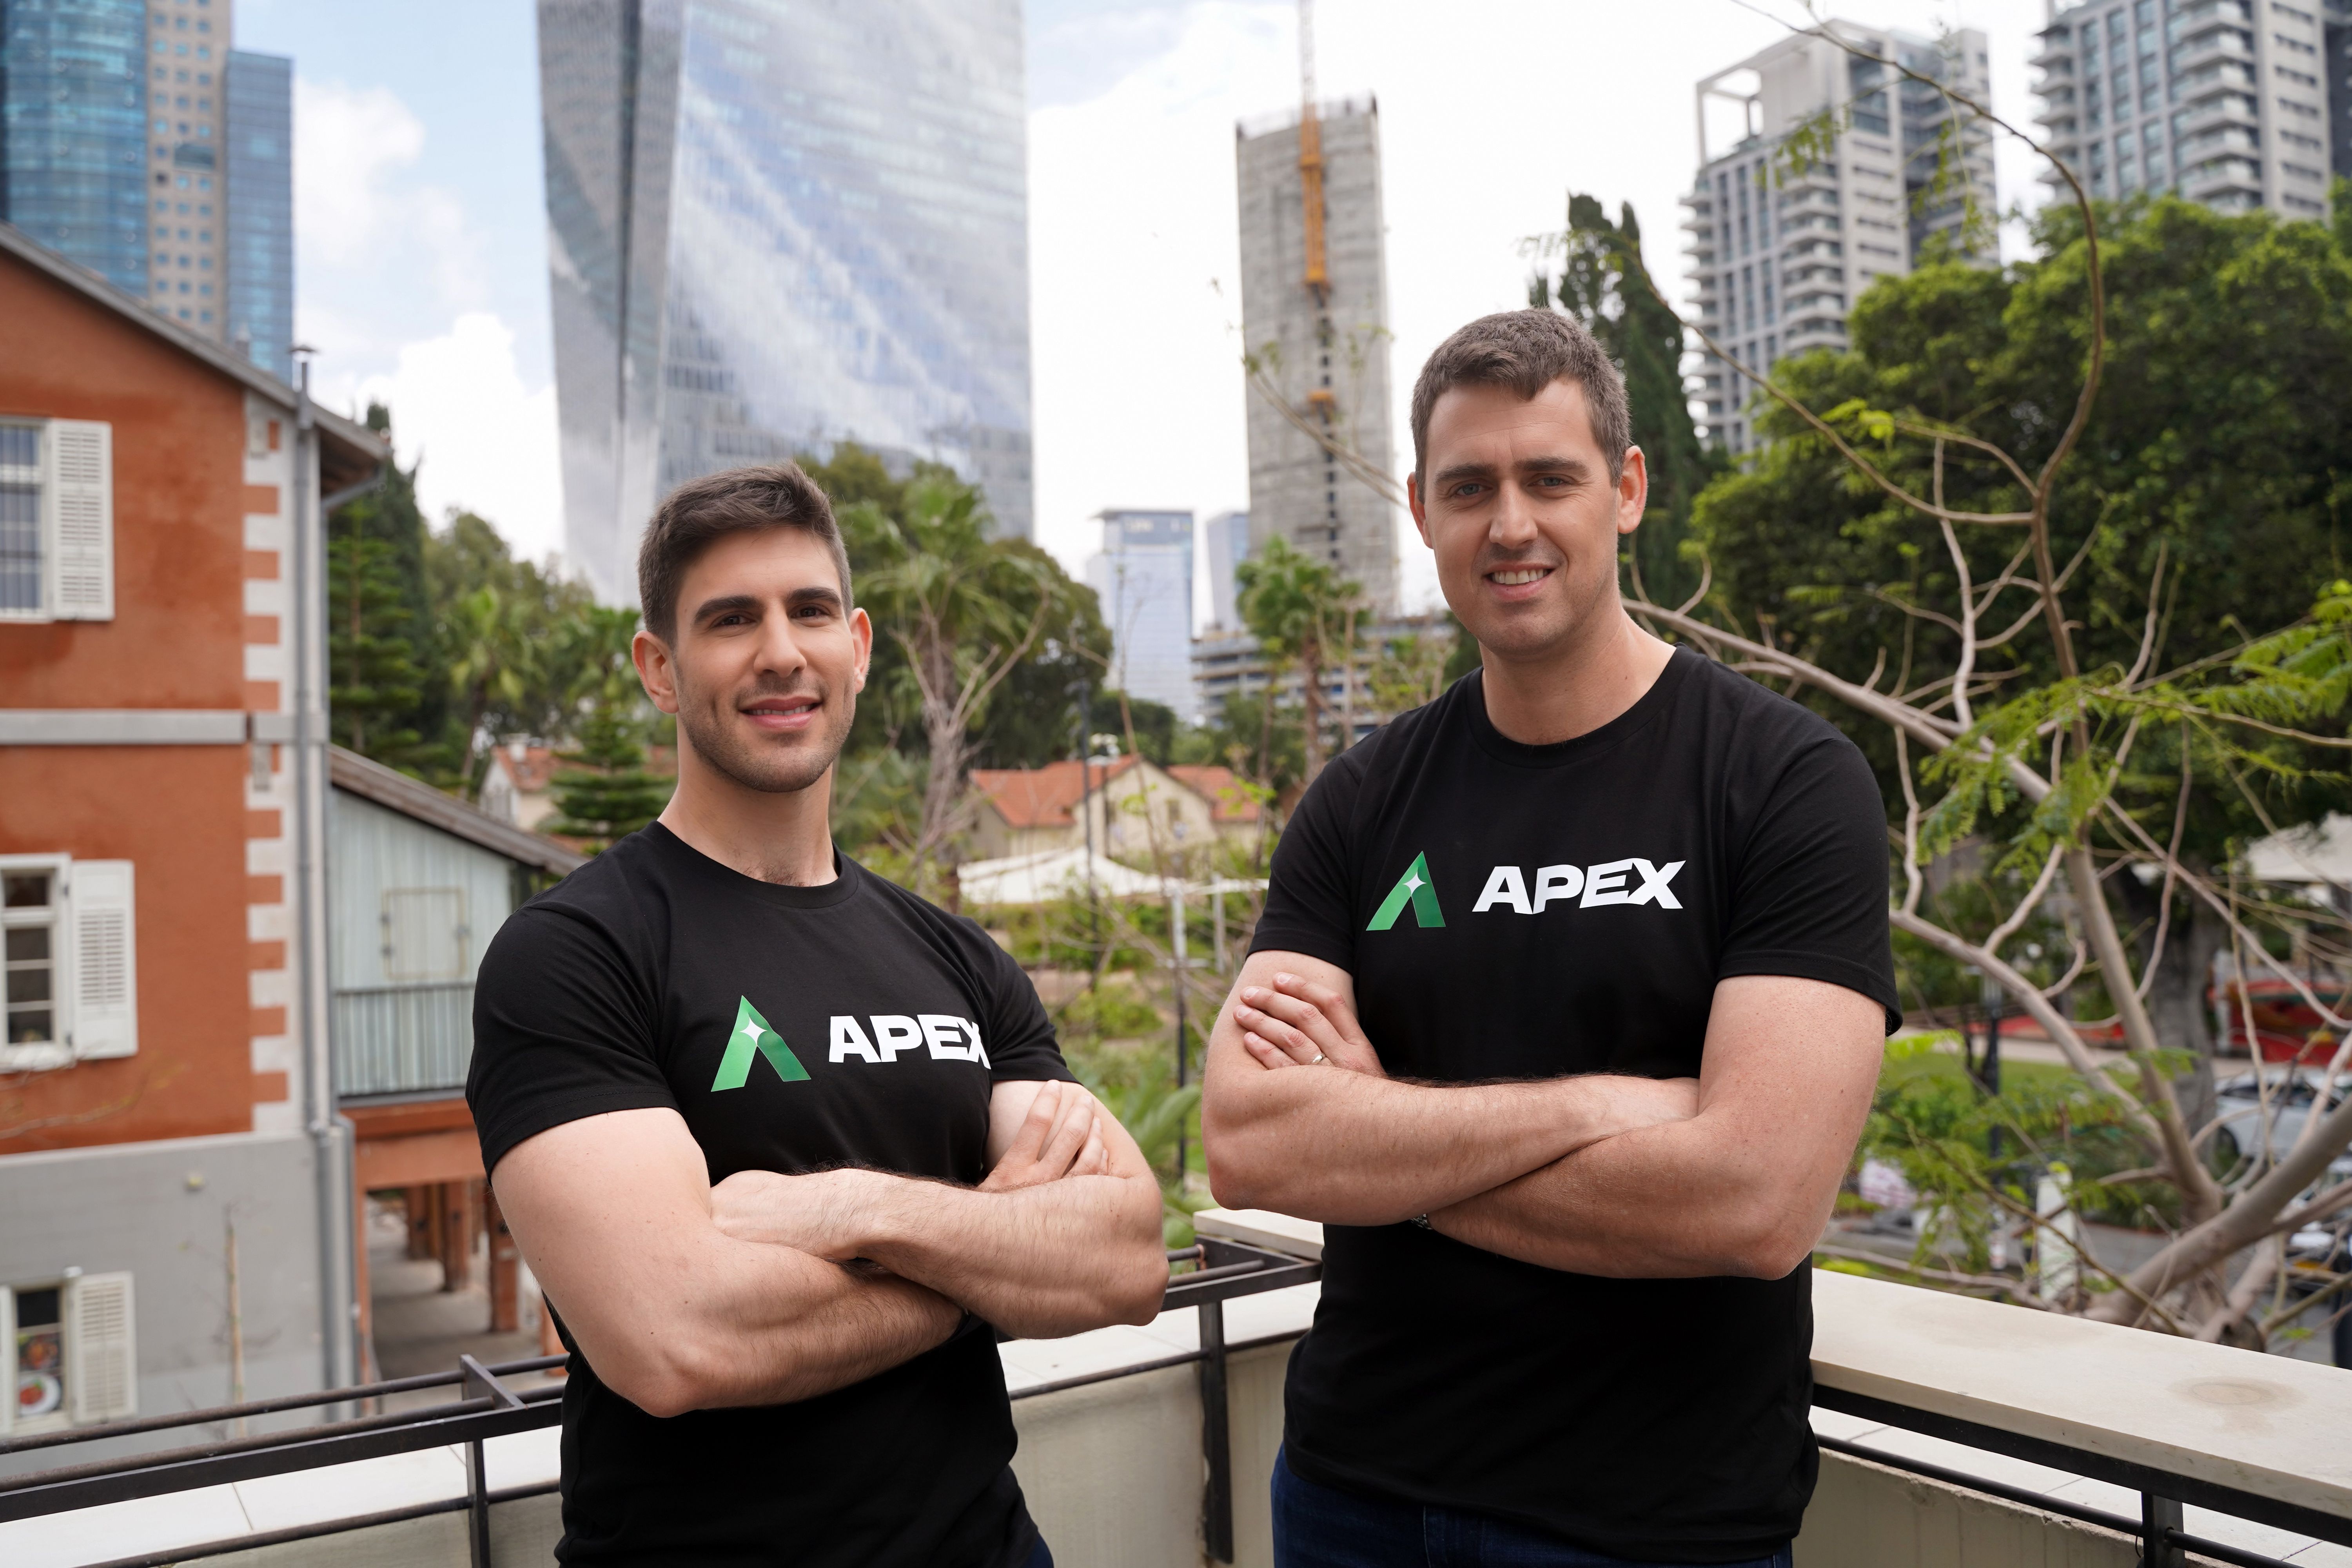 The Apex founding team, Tomer Avni and Matan Derman